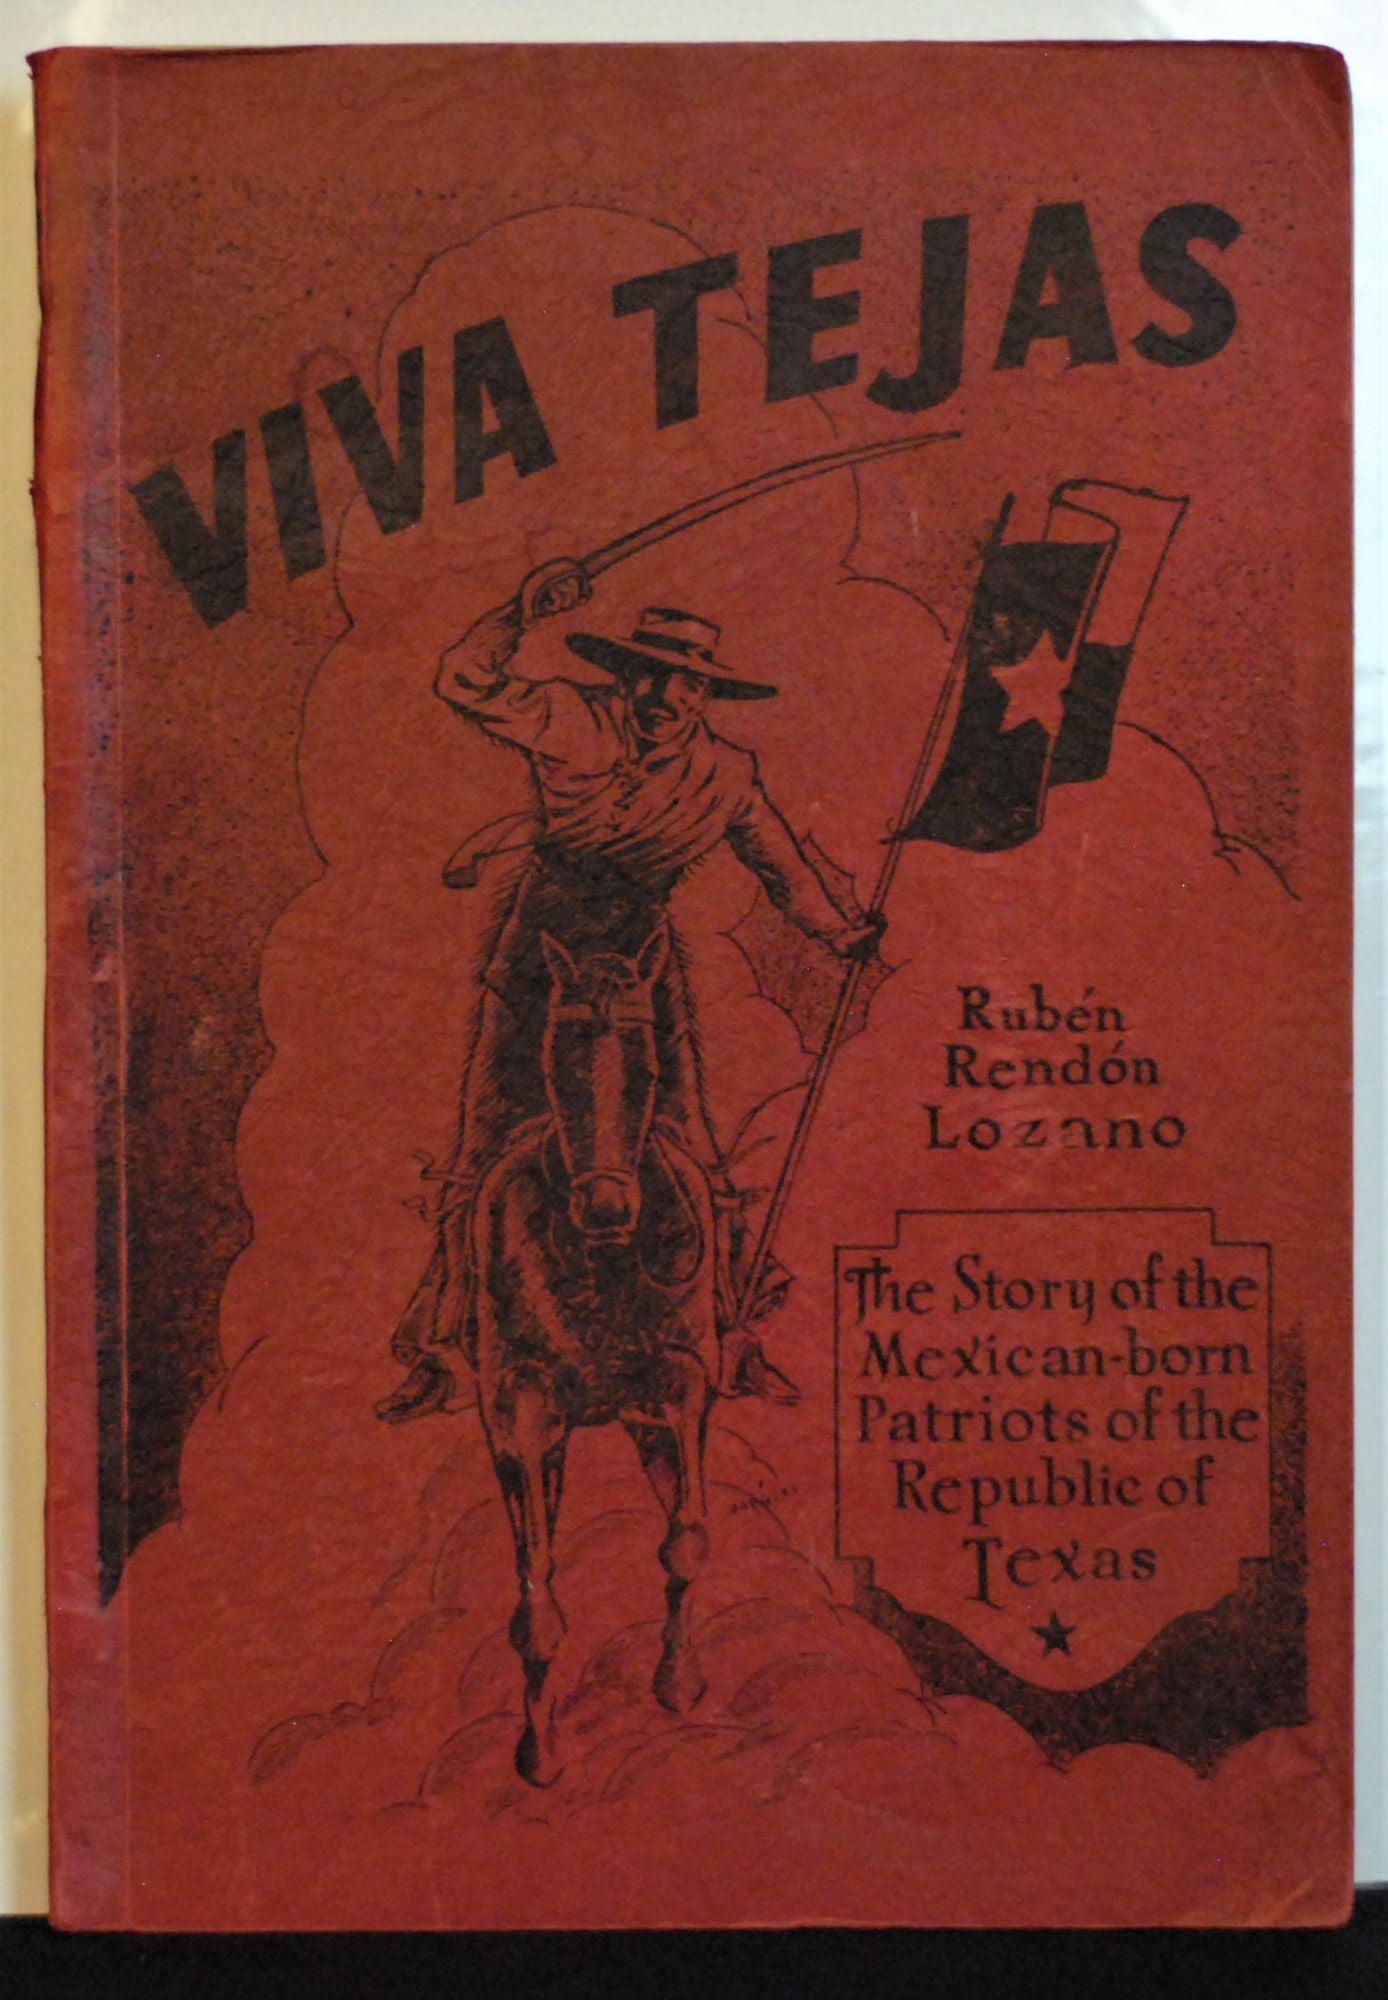 Texas Rangers, Viva Tejas